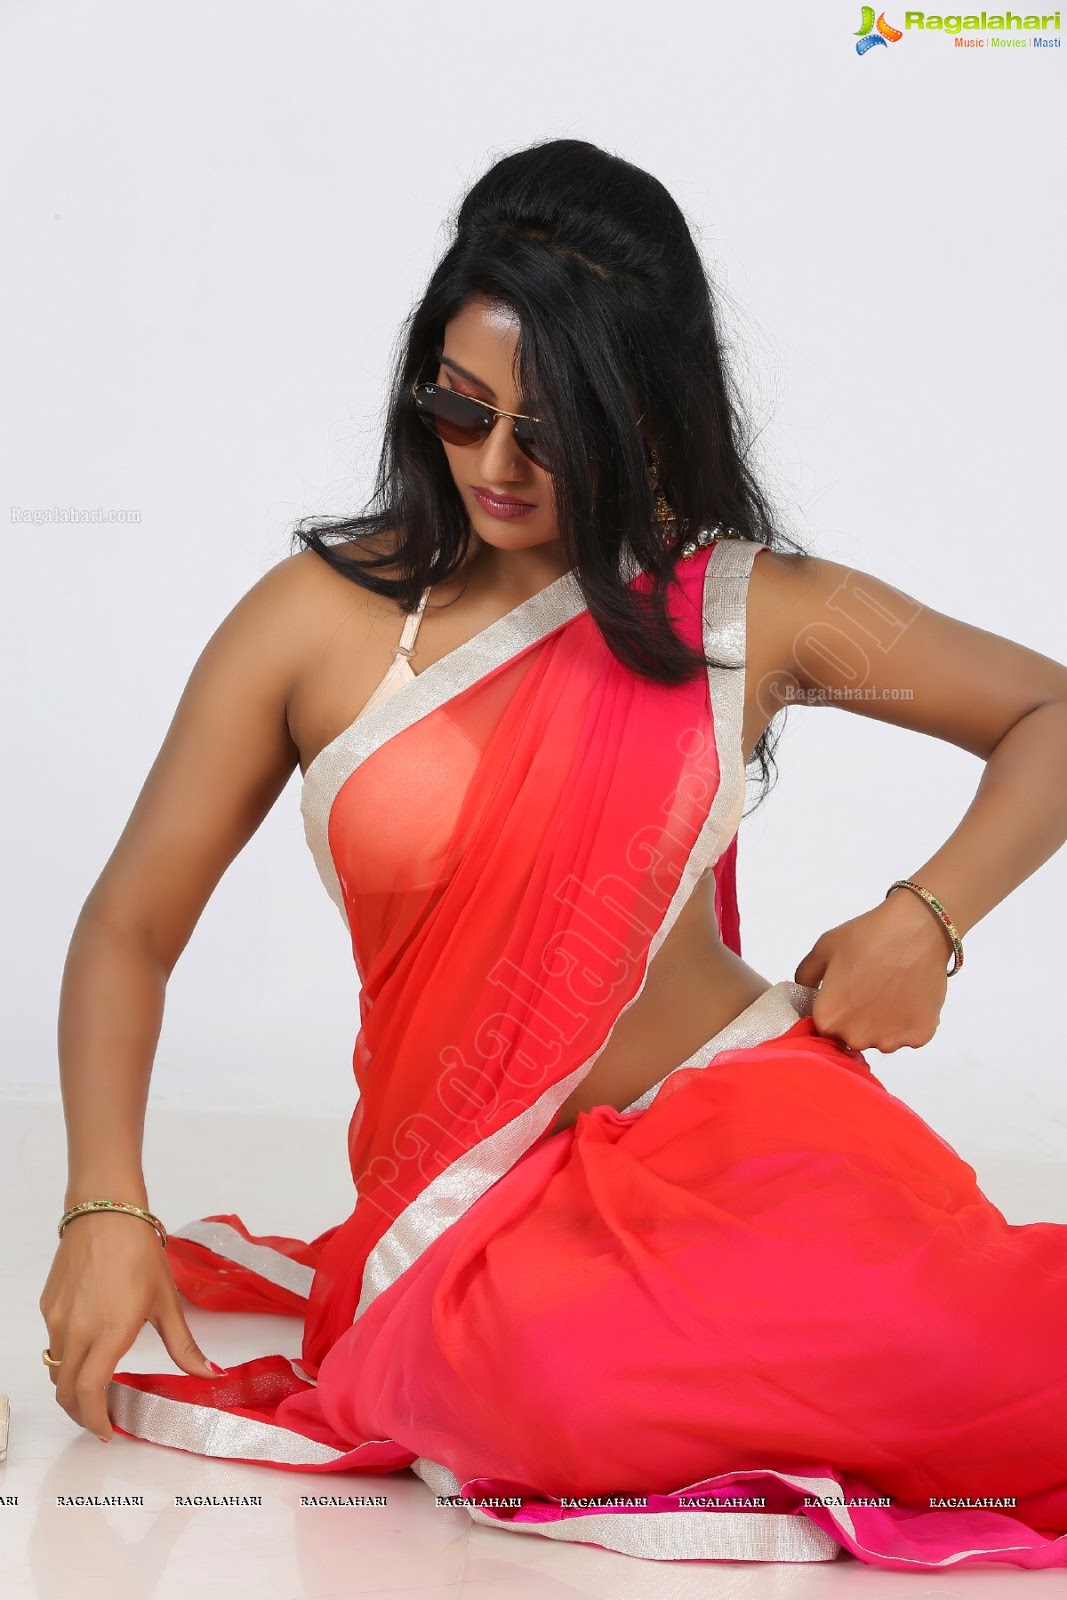 Sexy South Indian Actress Hot Foto Bugil Bokep 2017